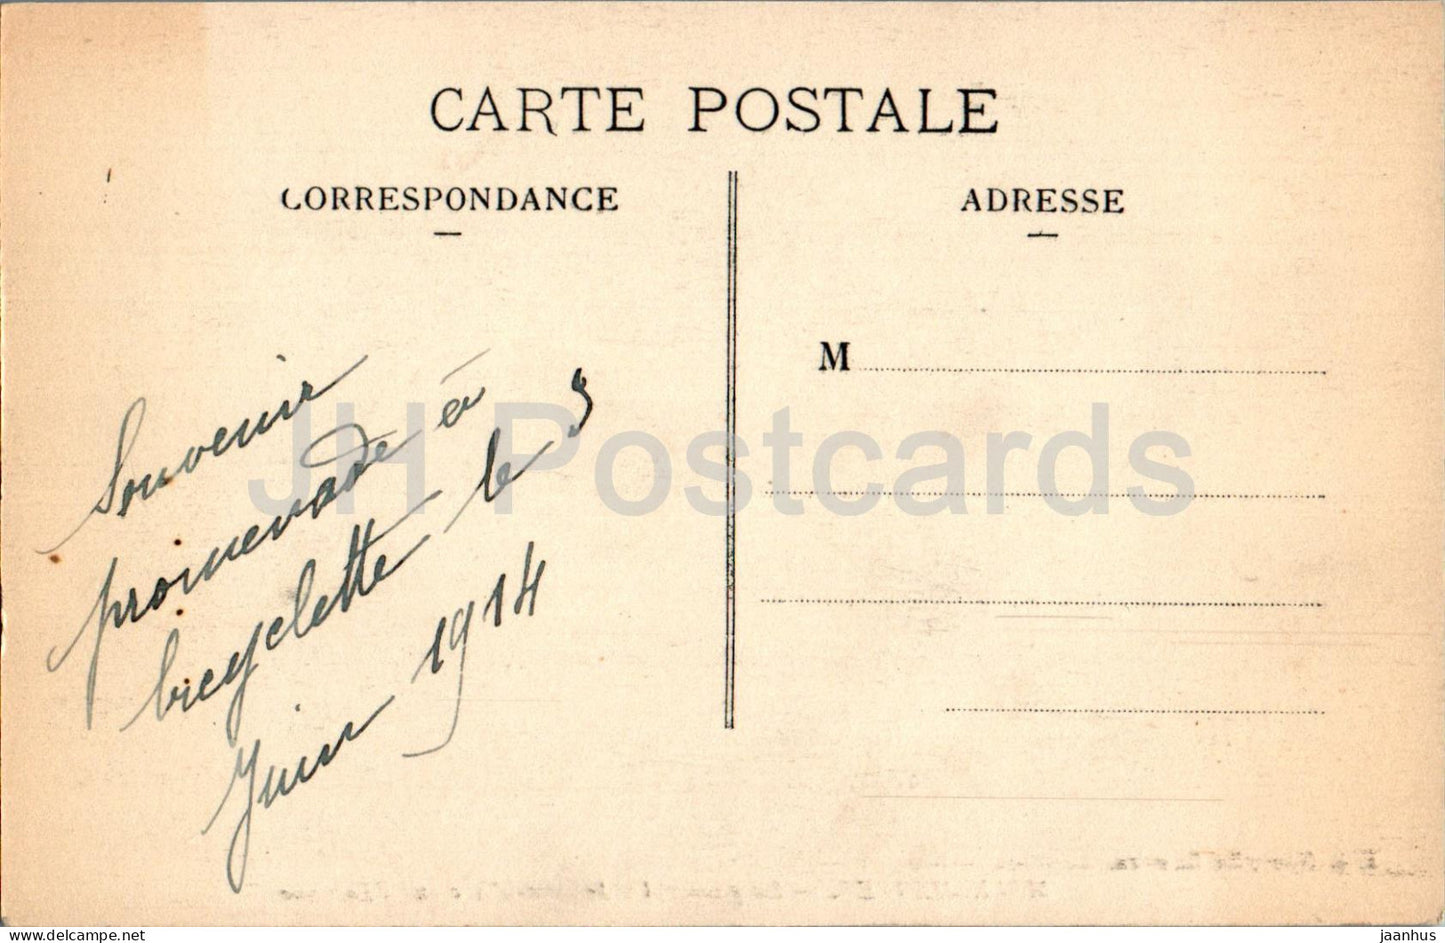 Malesherbes - La passerelle Jeanne d'Arc sur l'Essonne - footbridge - old postcard - 1914 - France - used